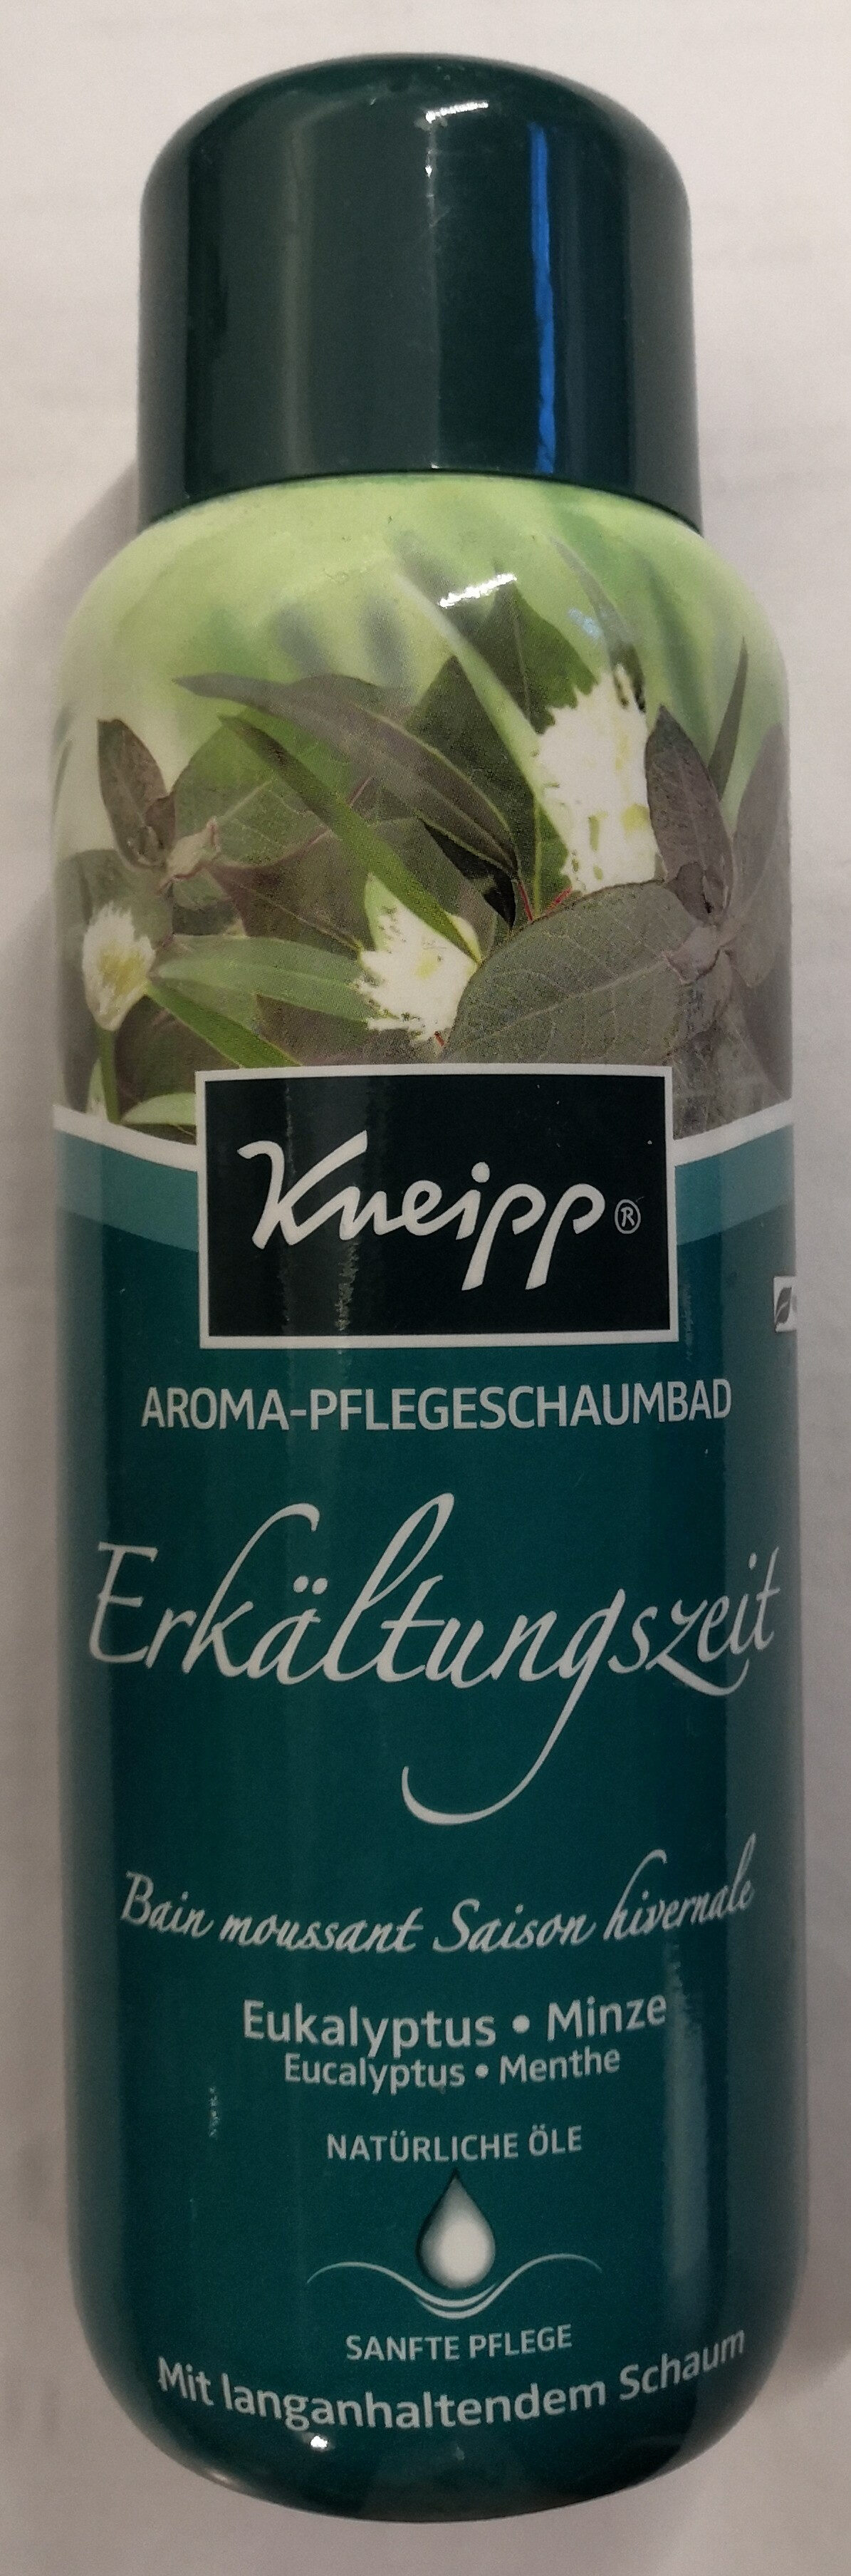 Aroma-Pflegeschaumbad Erkältungszeit Eukalyptus-Minze - Produto - de